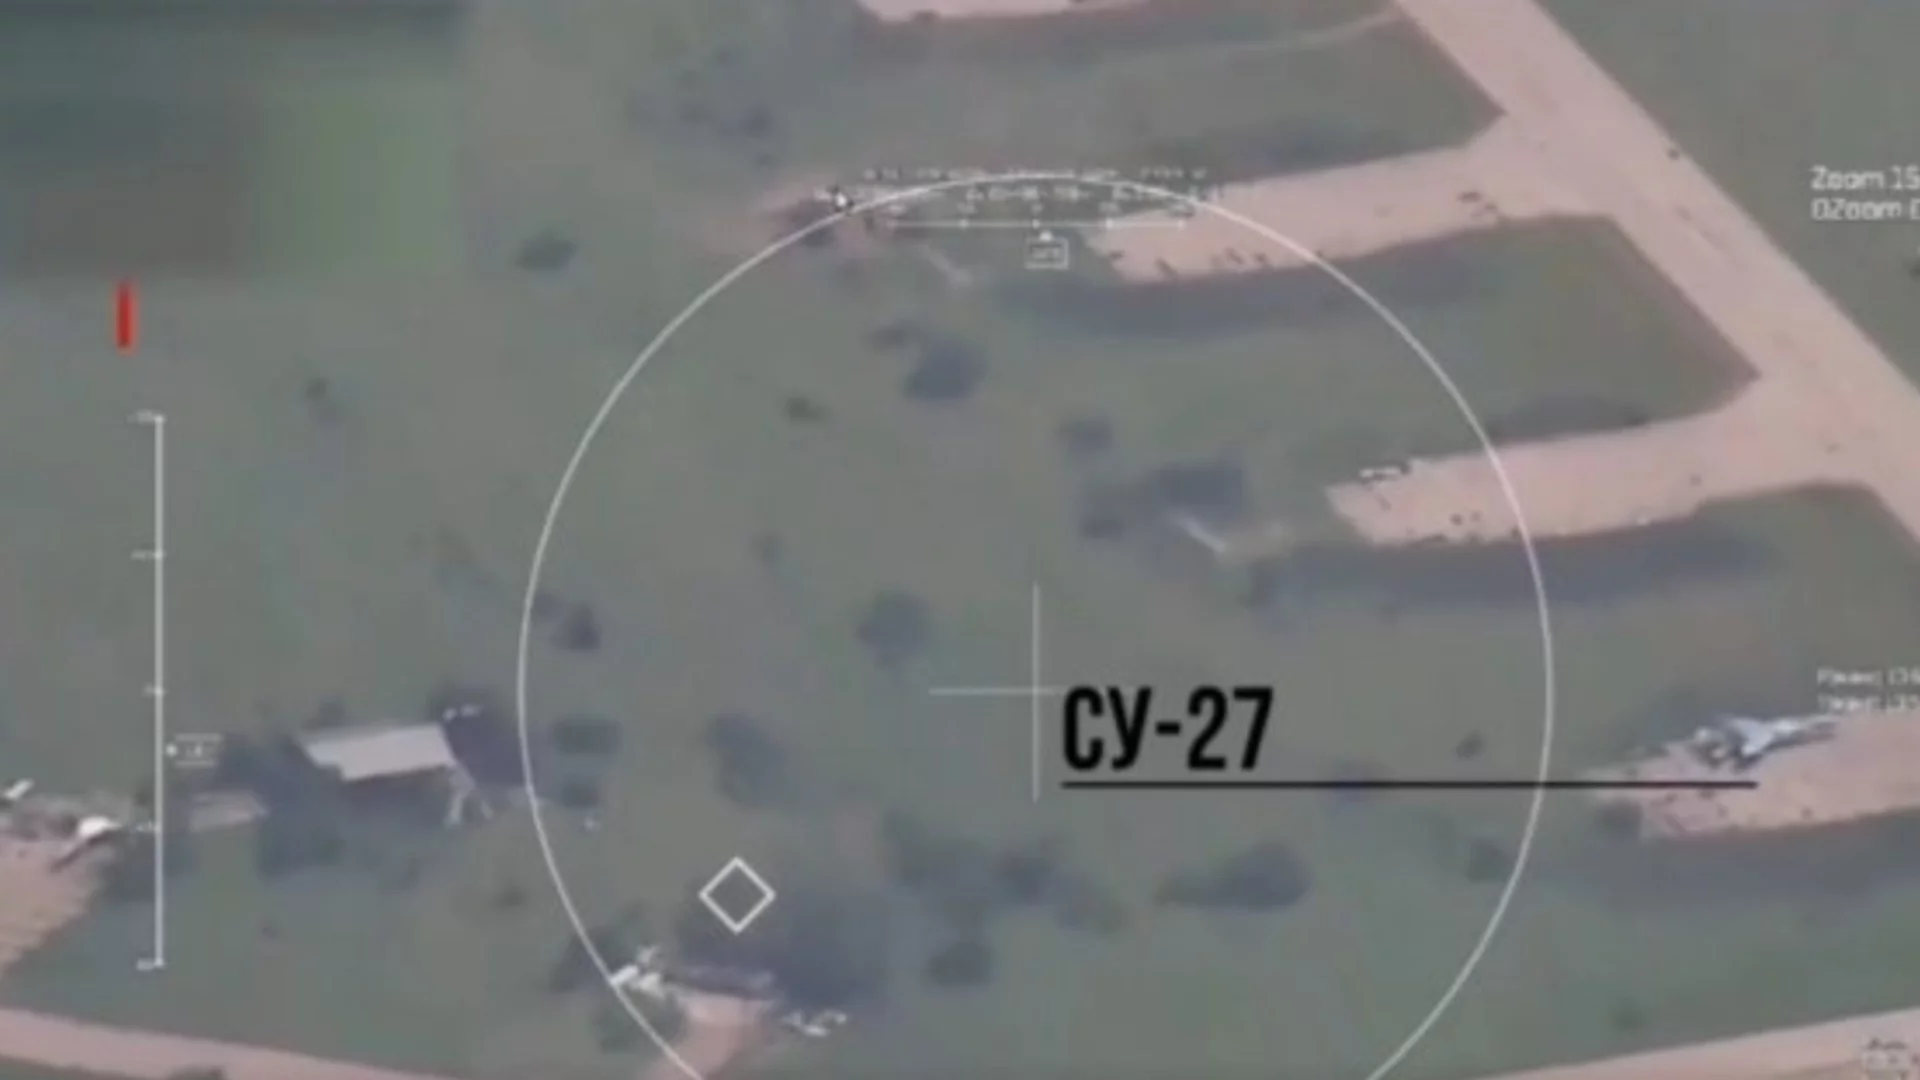 "Висока цена": Русия порази военното летище Миргород, колко Су-27 загуби Украйна? (ВИДЕО)